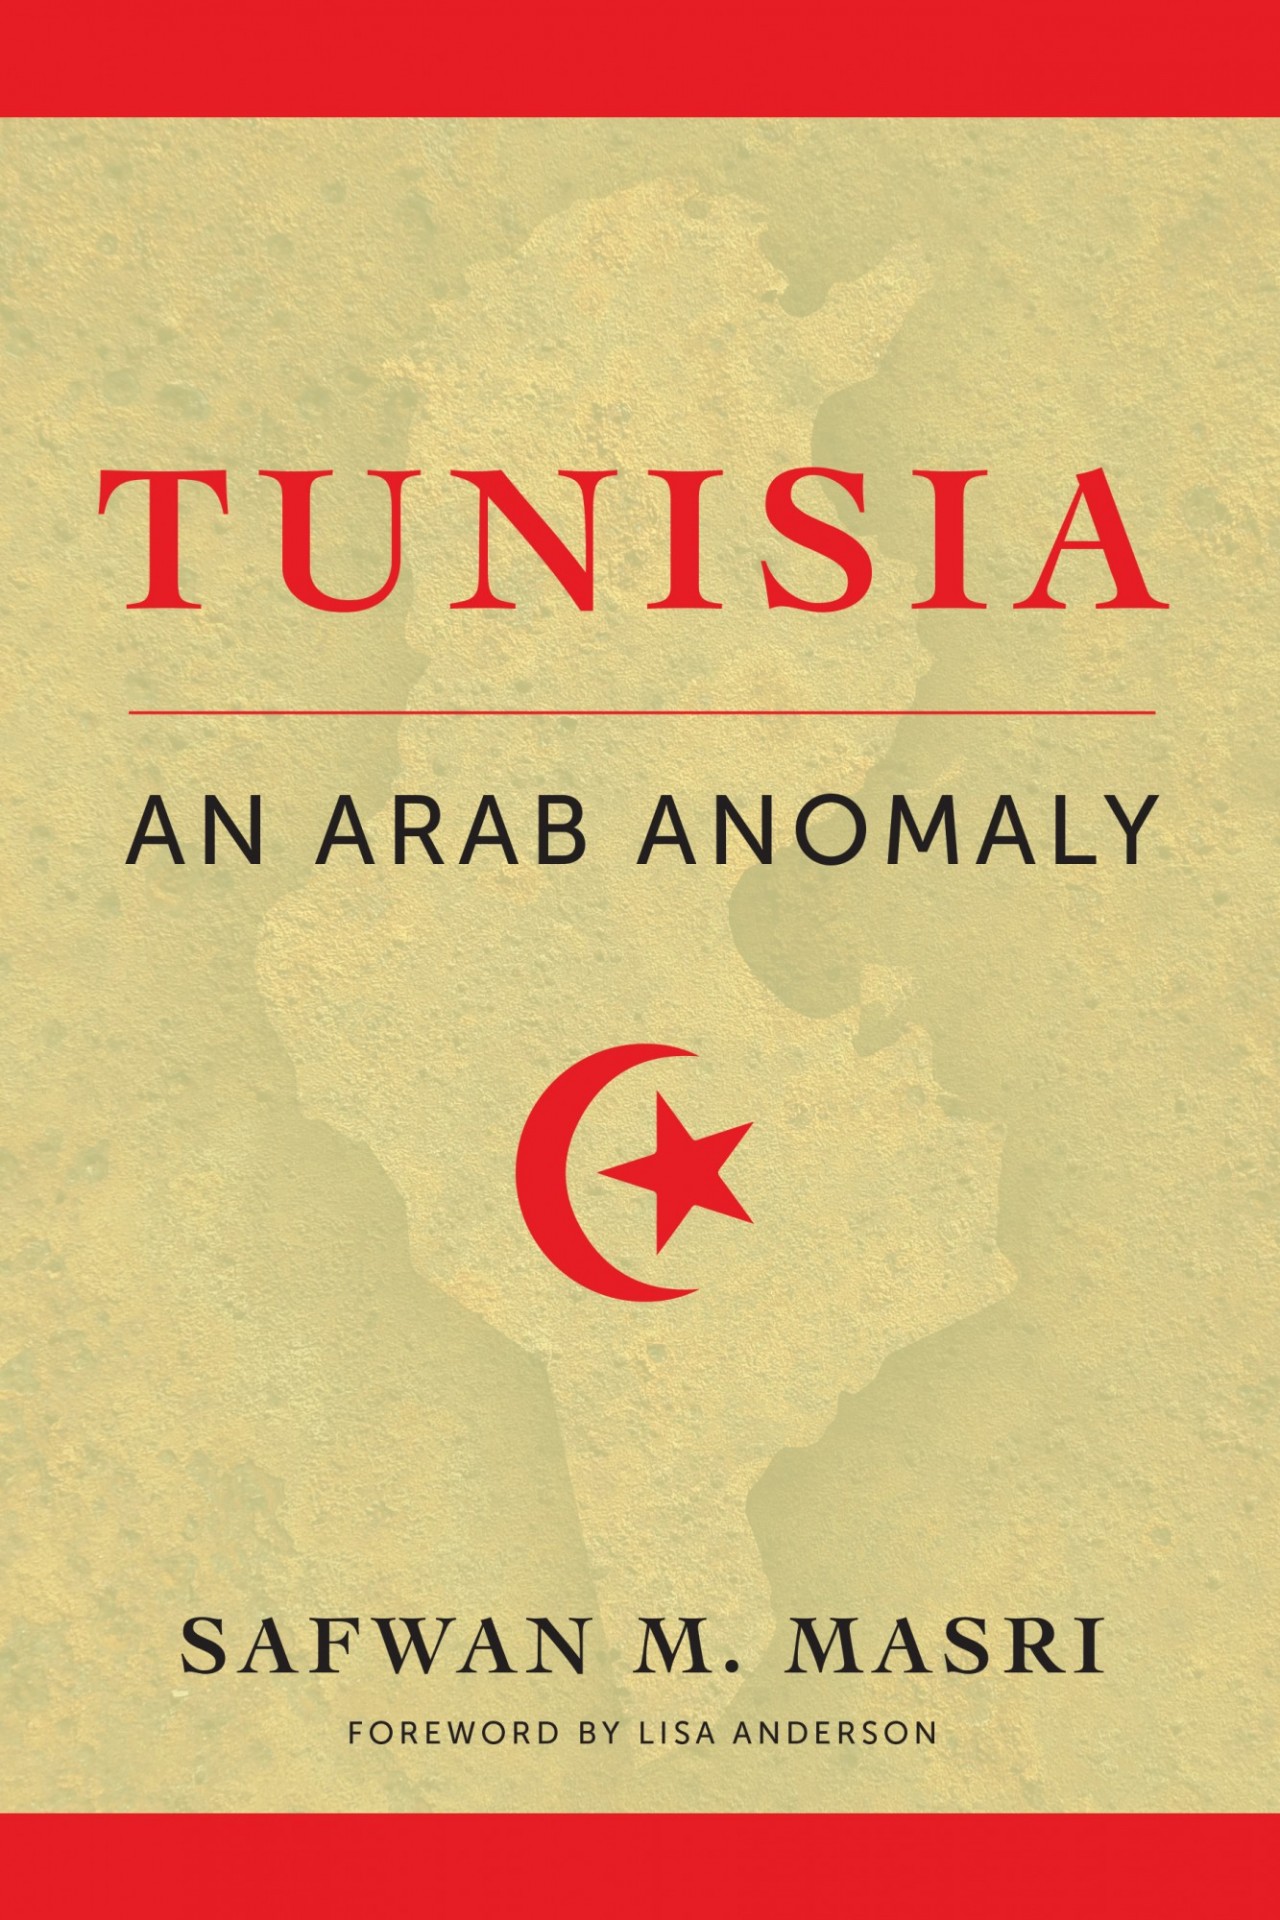 Buchcover Safwan M. Masri: "Tunisia – An Arab anomaly", Columbia University Press 2017